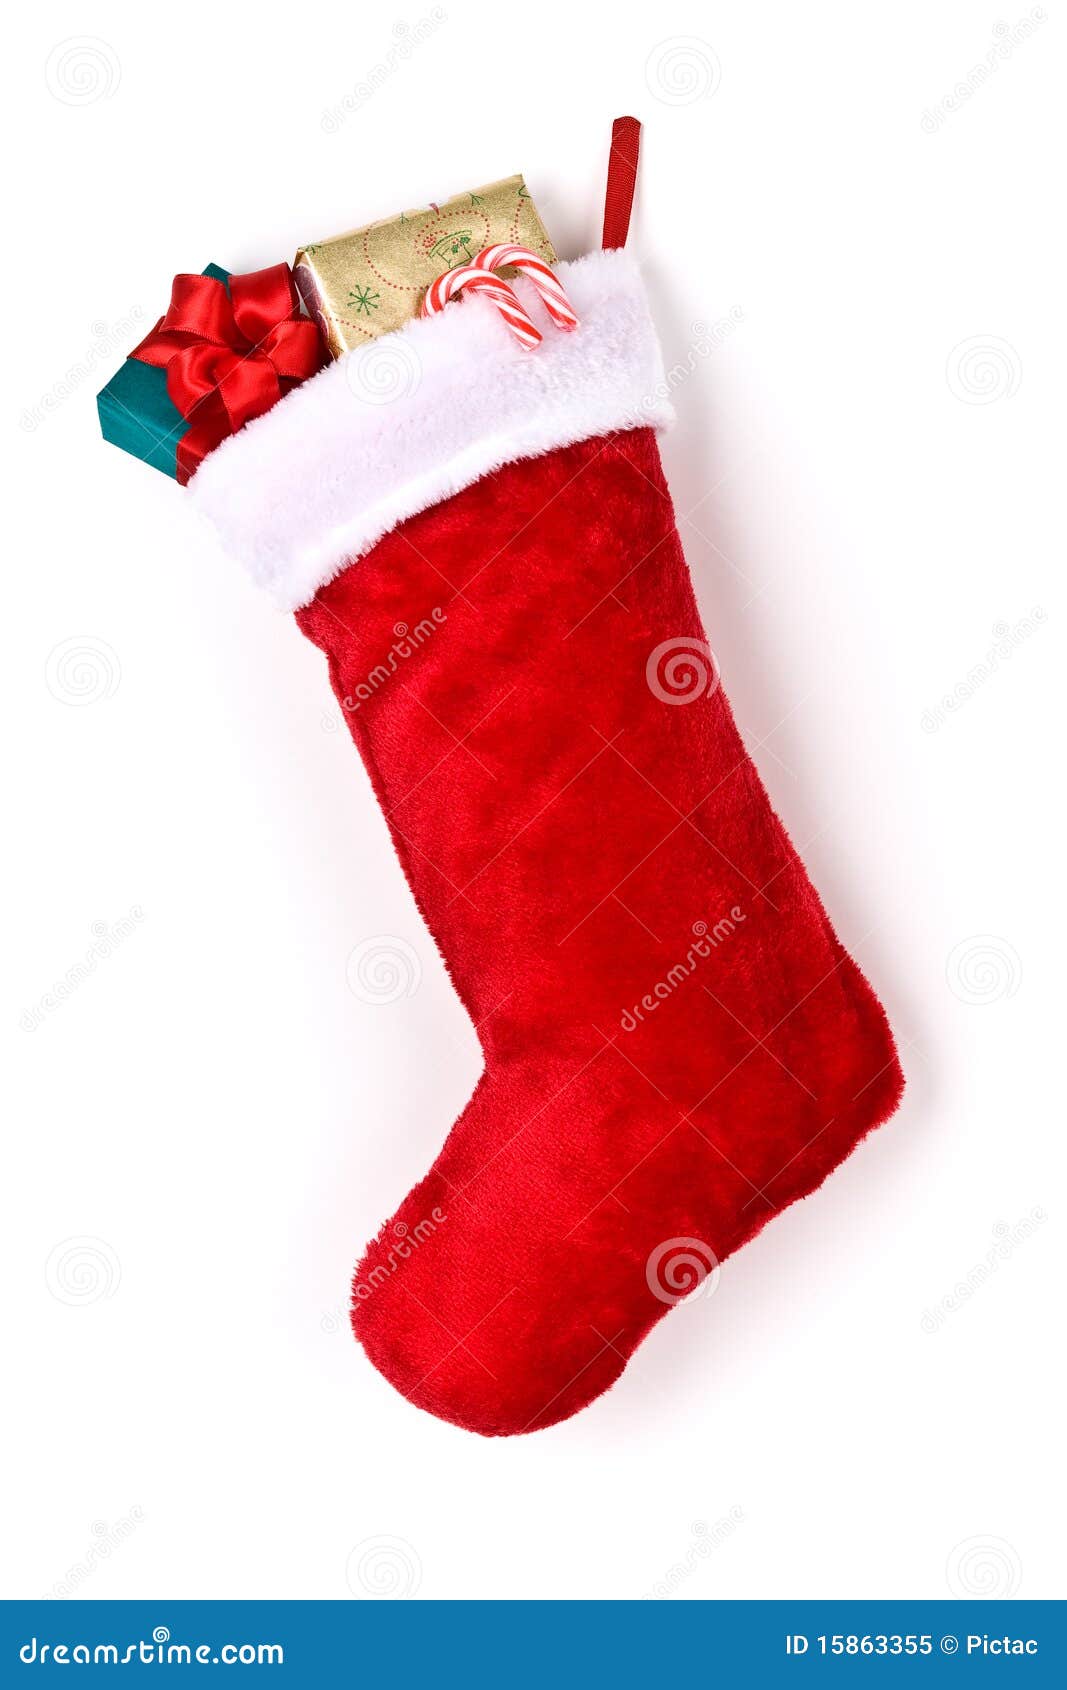 stuffed christmas stocking